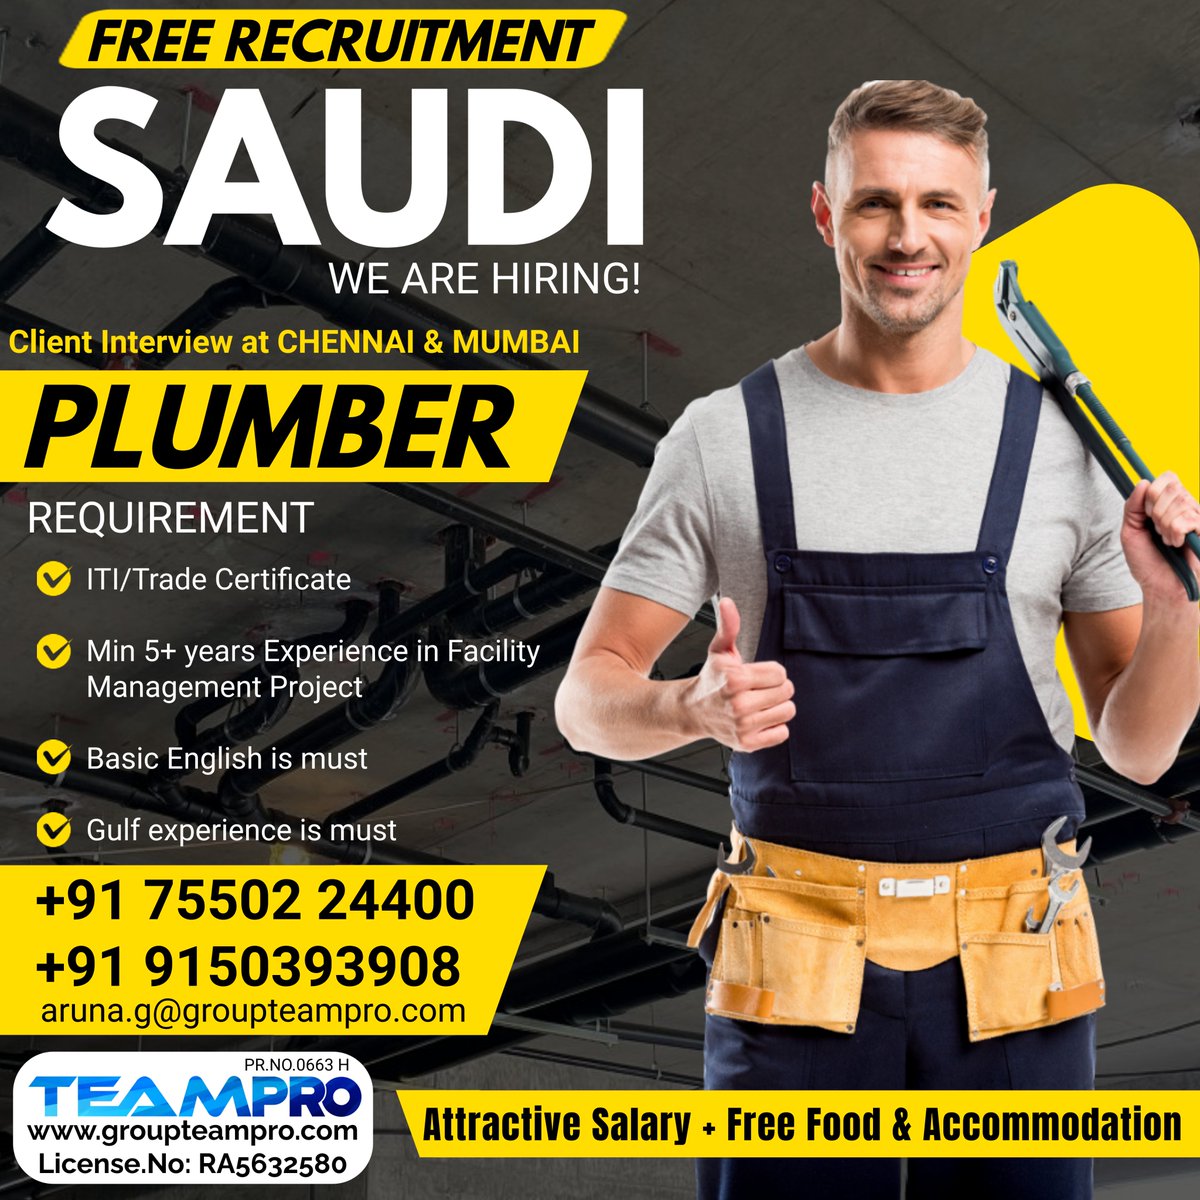 #Saudiarabia #Saudijobs #free #recruitment #Directinterview #Technician #Generator #Plumber #ITI #TradeCertificate #Chennai #Mumbai #Direct #Immediate #Joiners #saudiprojects